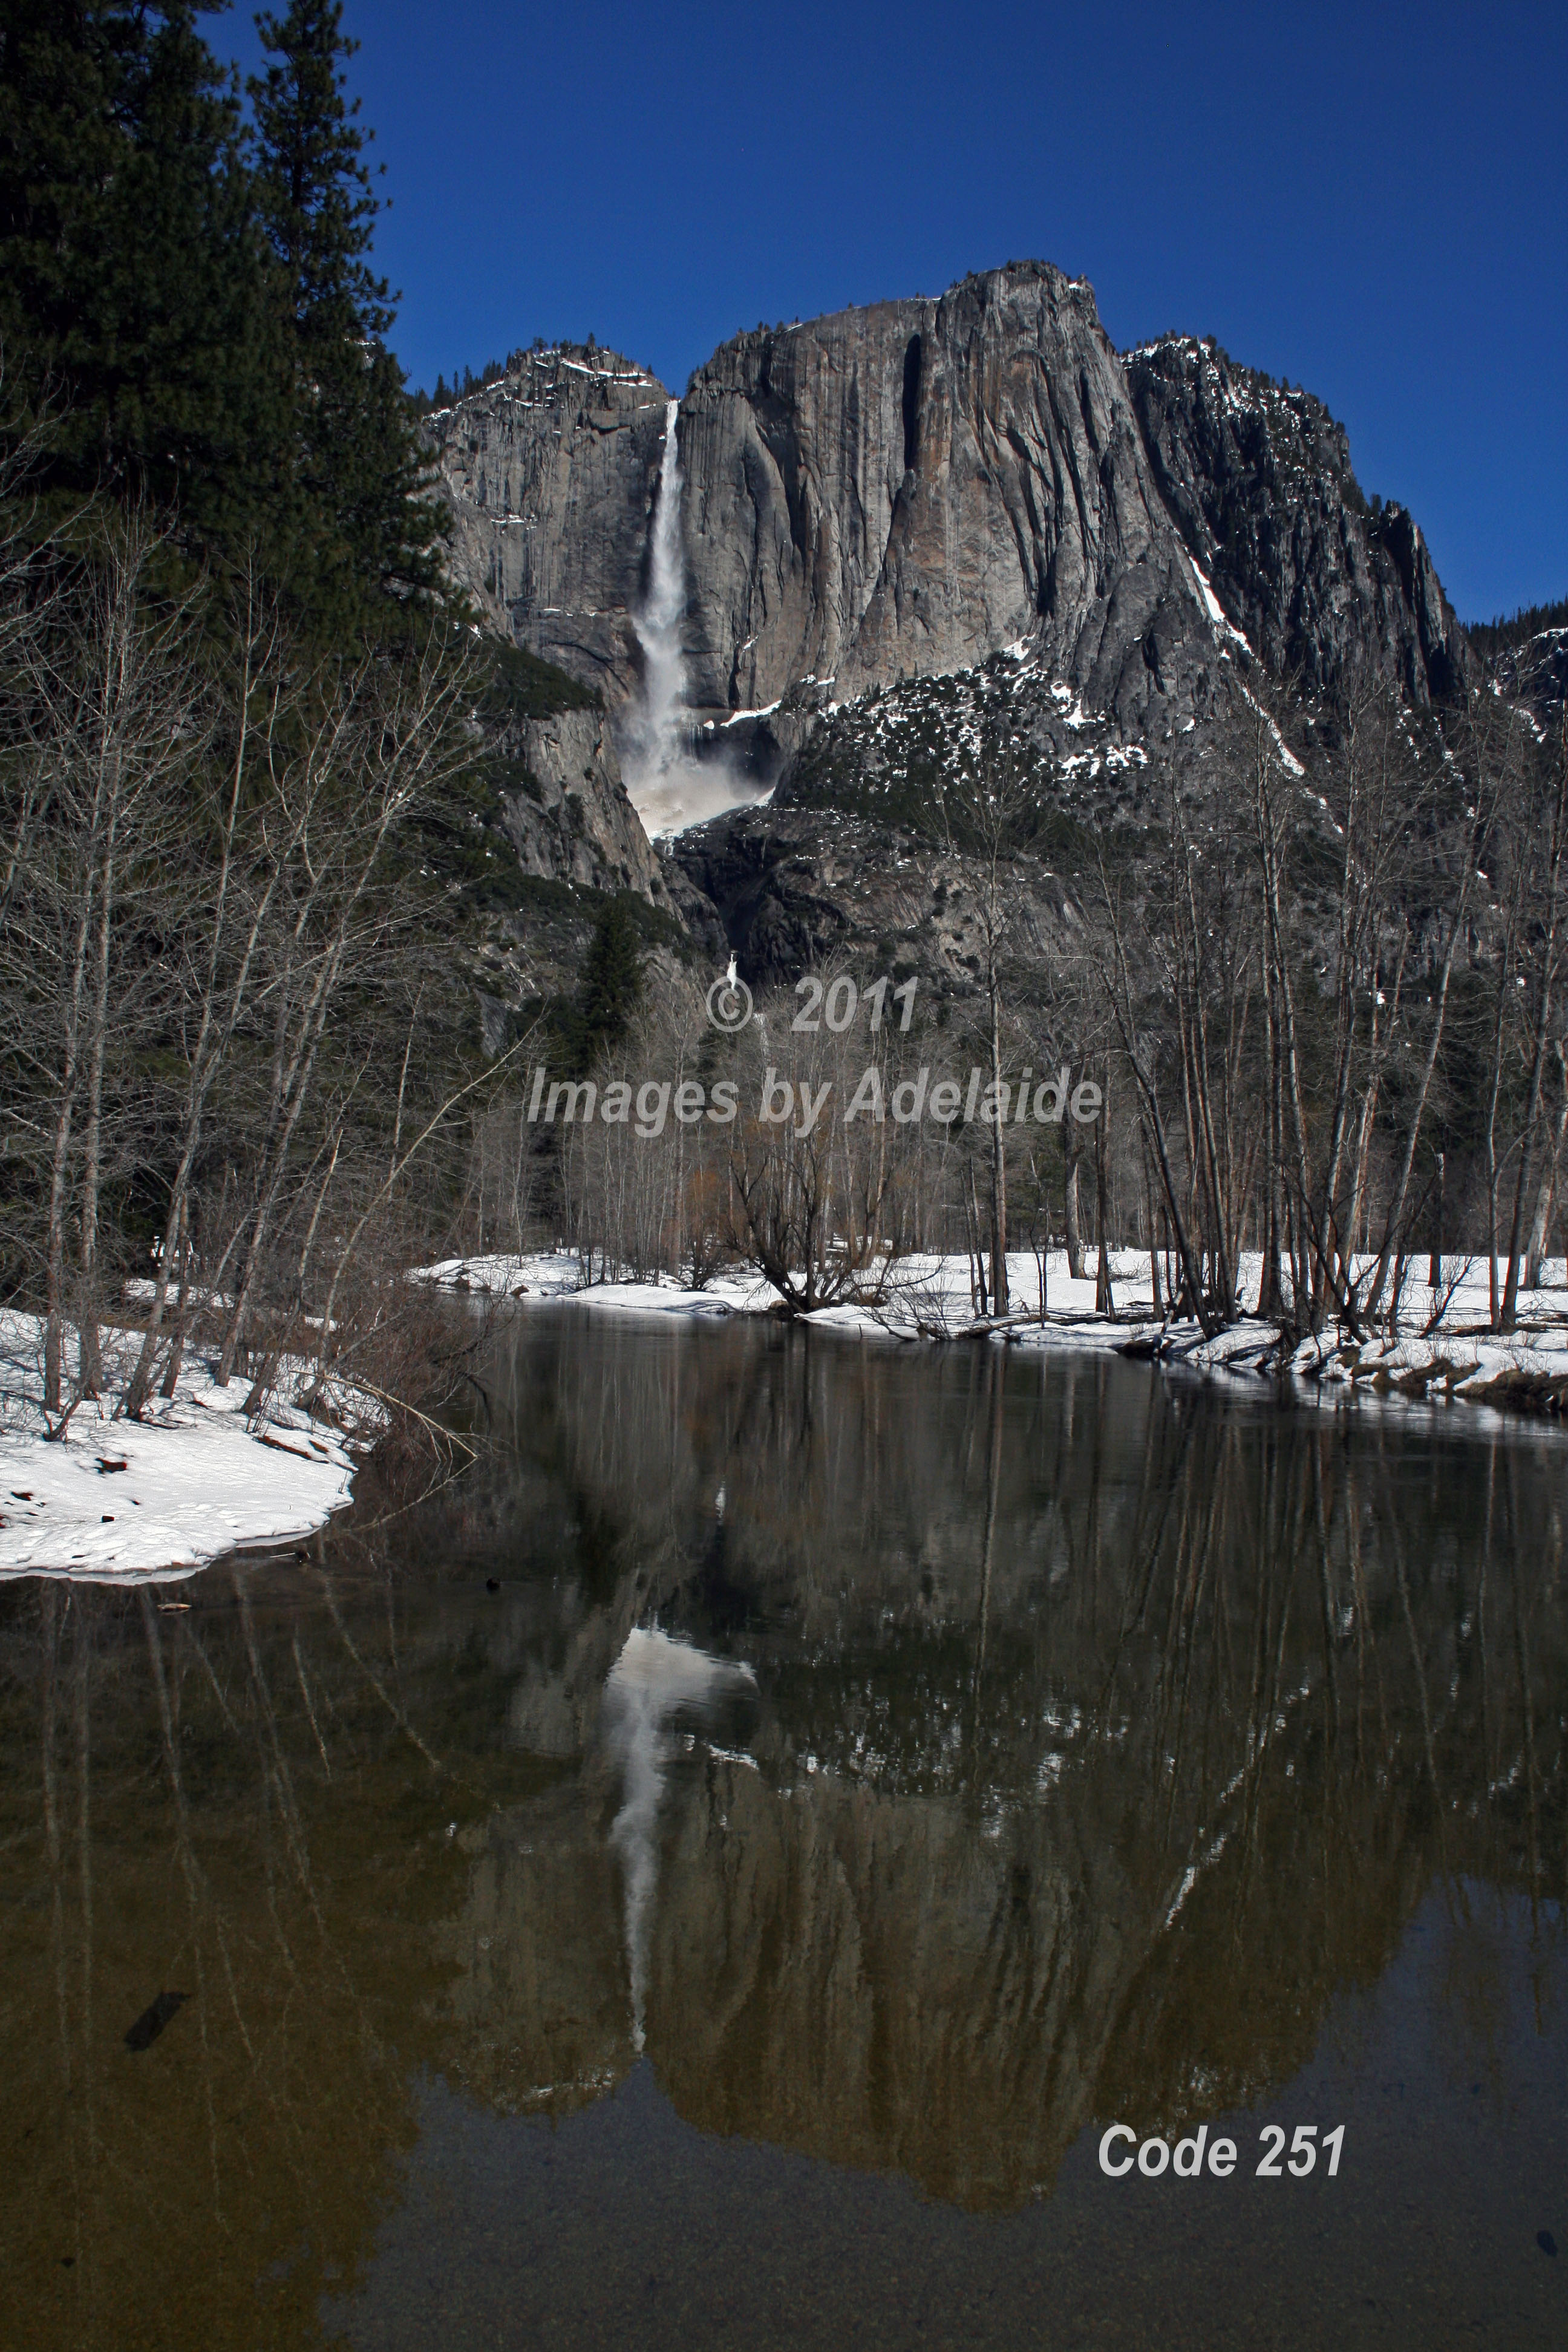 Upper Yosemite Fall Merced River Reflection